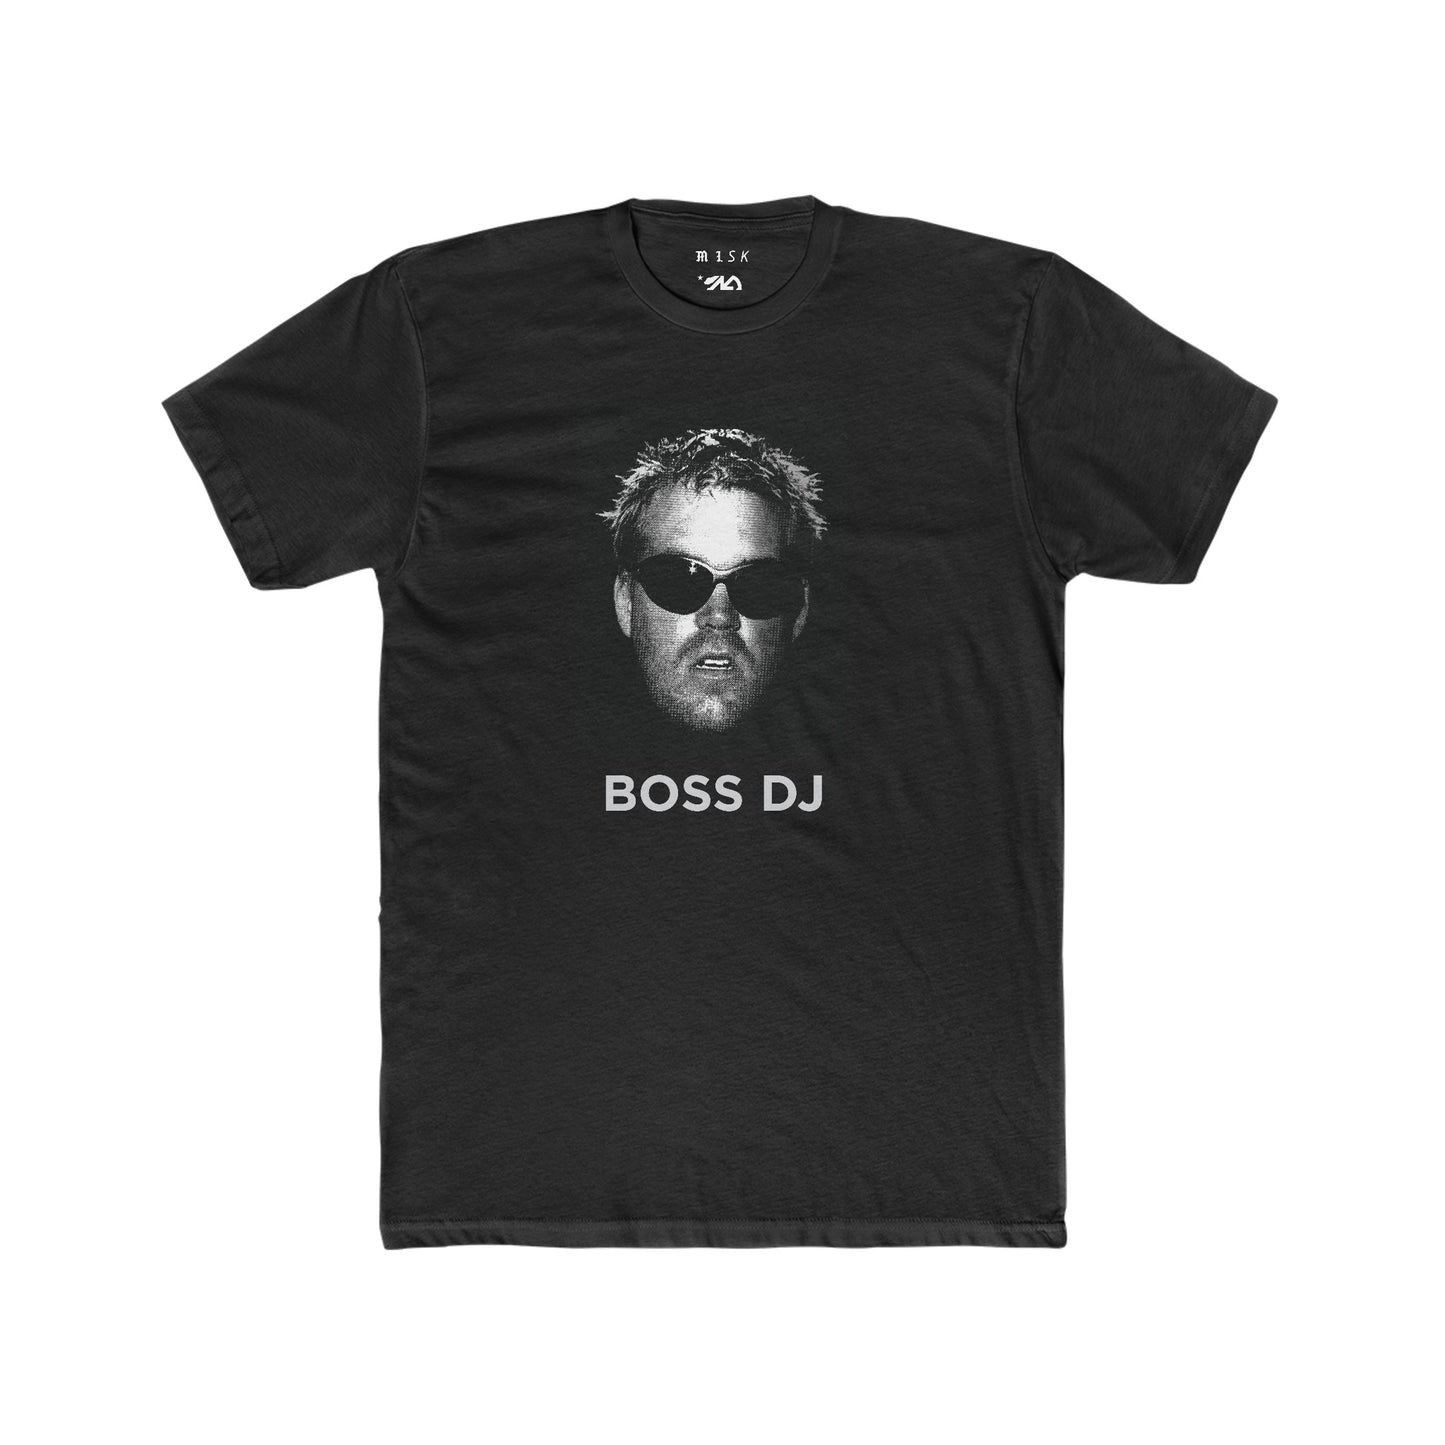 BOSS DJ / GRAYSCALE